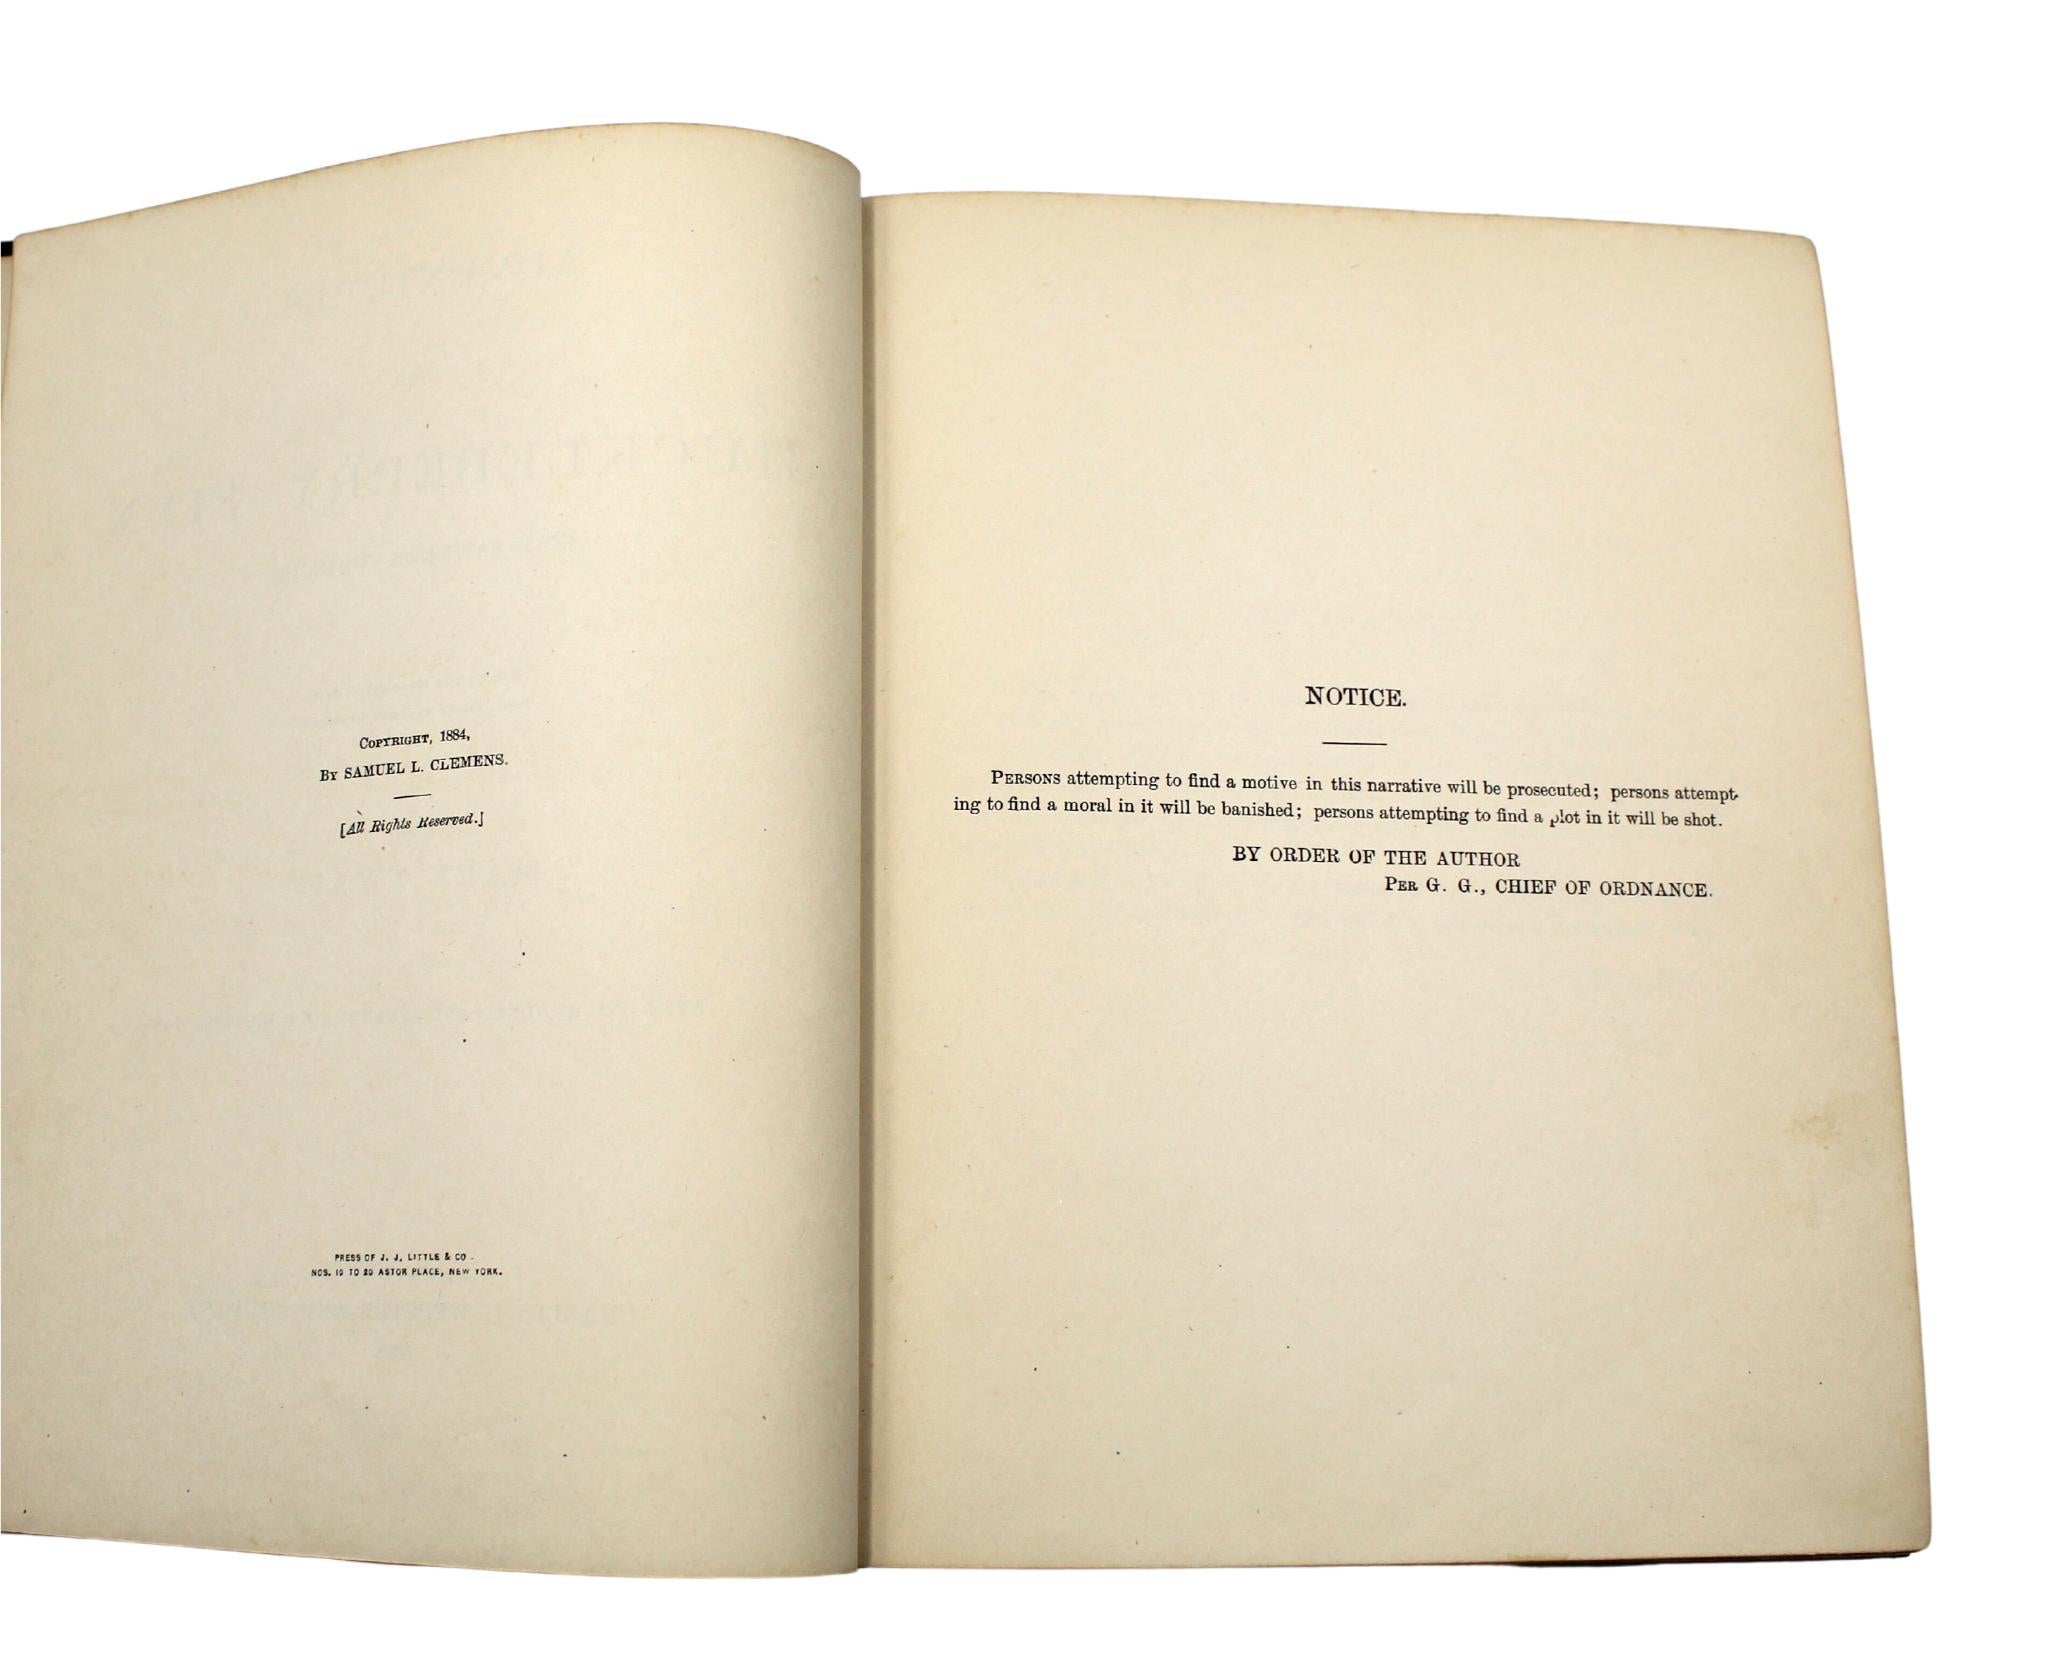 Adventures of Huckleberry Finn by Mark Twain, First American Edition, 1885 3